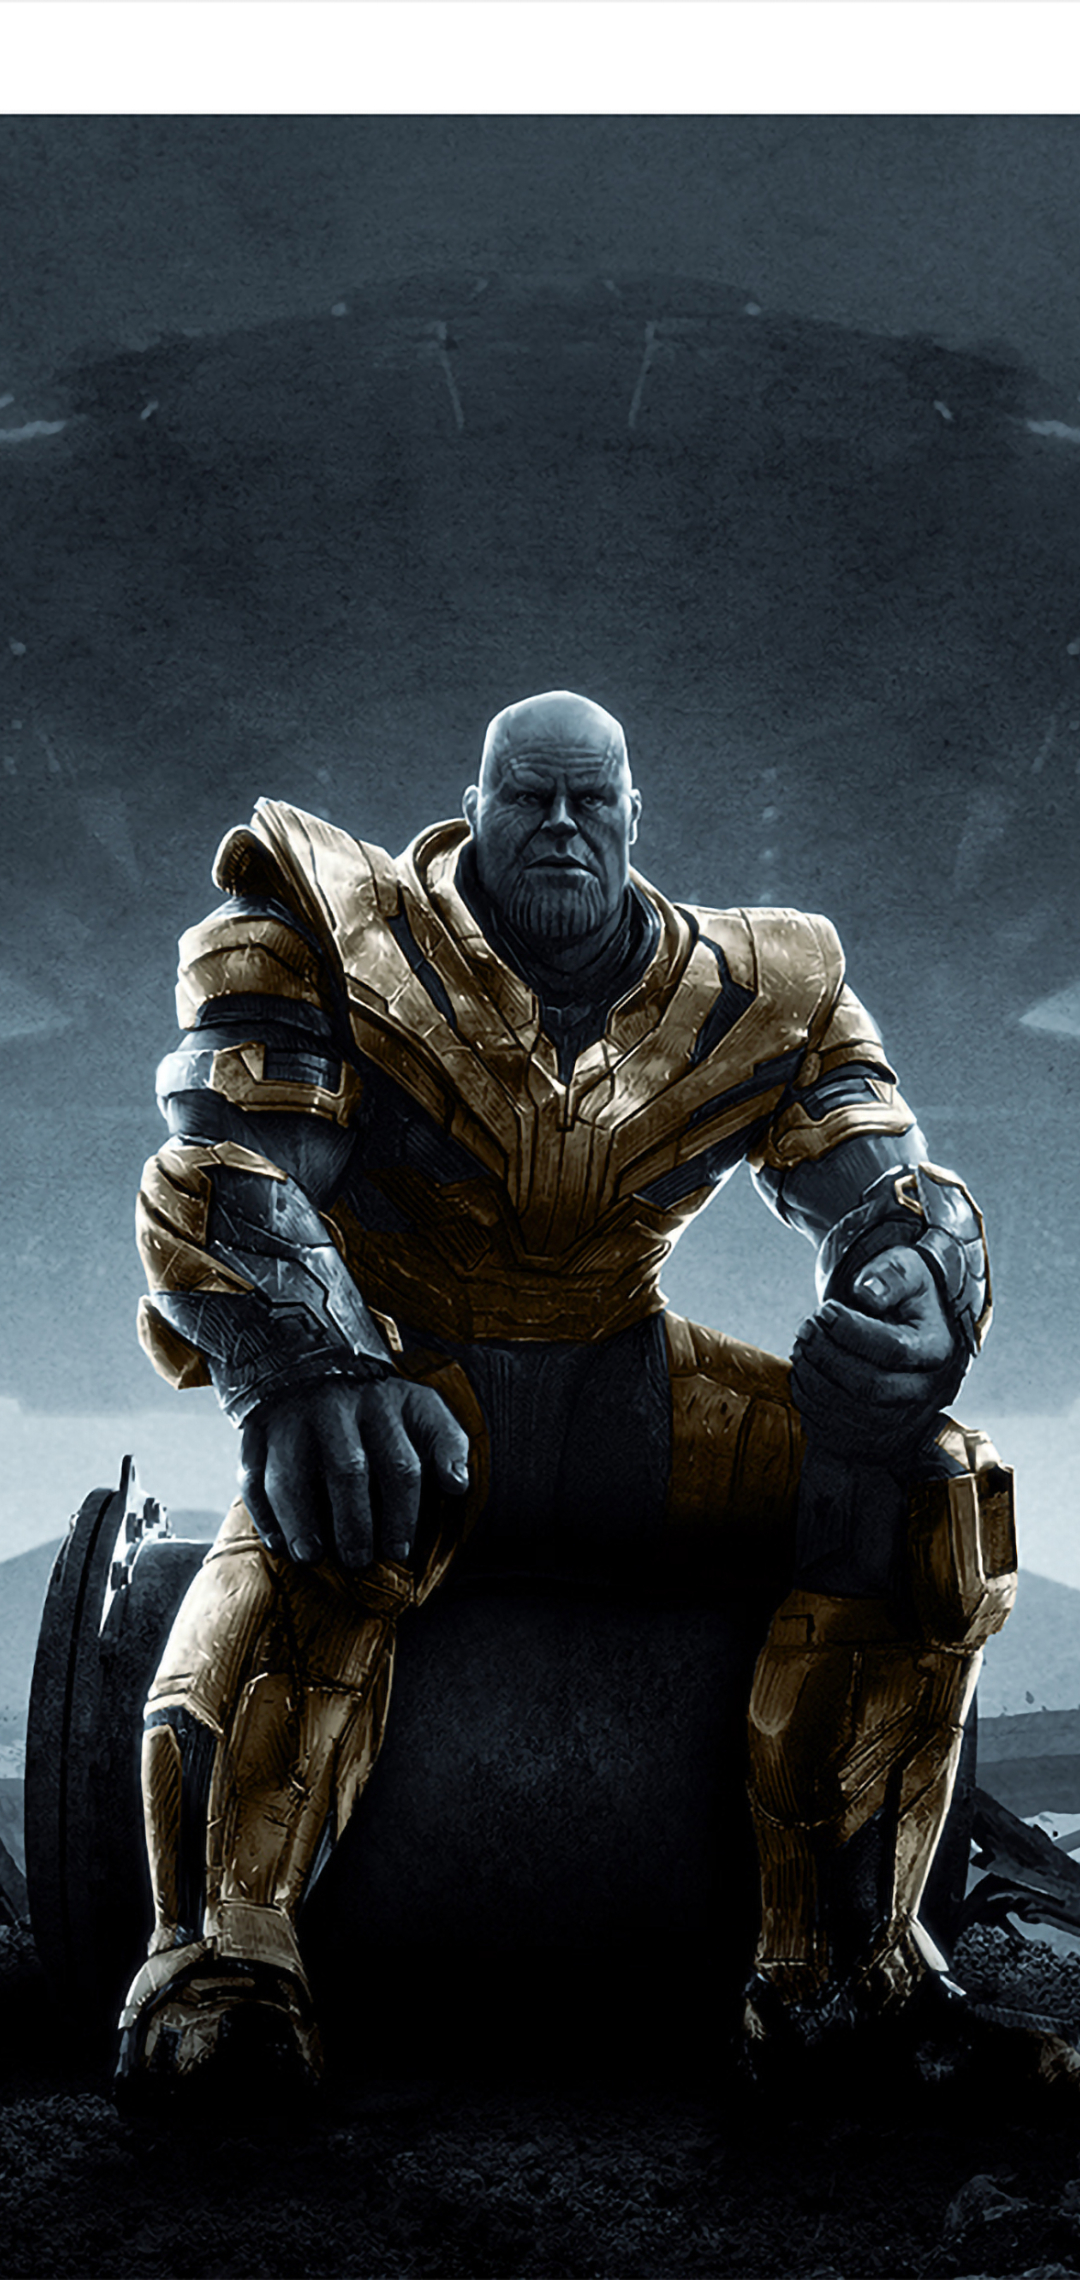 1080x2280 Thanos Sitting In Avengers Endgame One Plus 6huawei P20